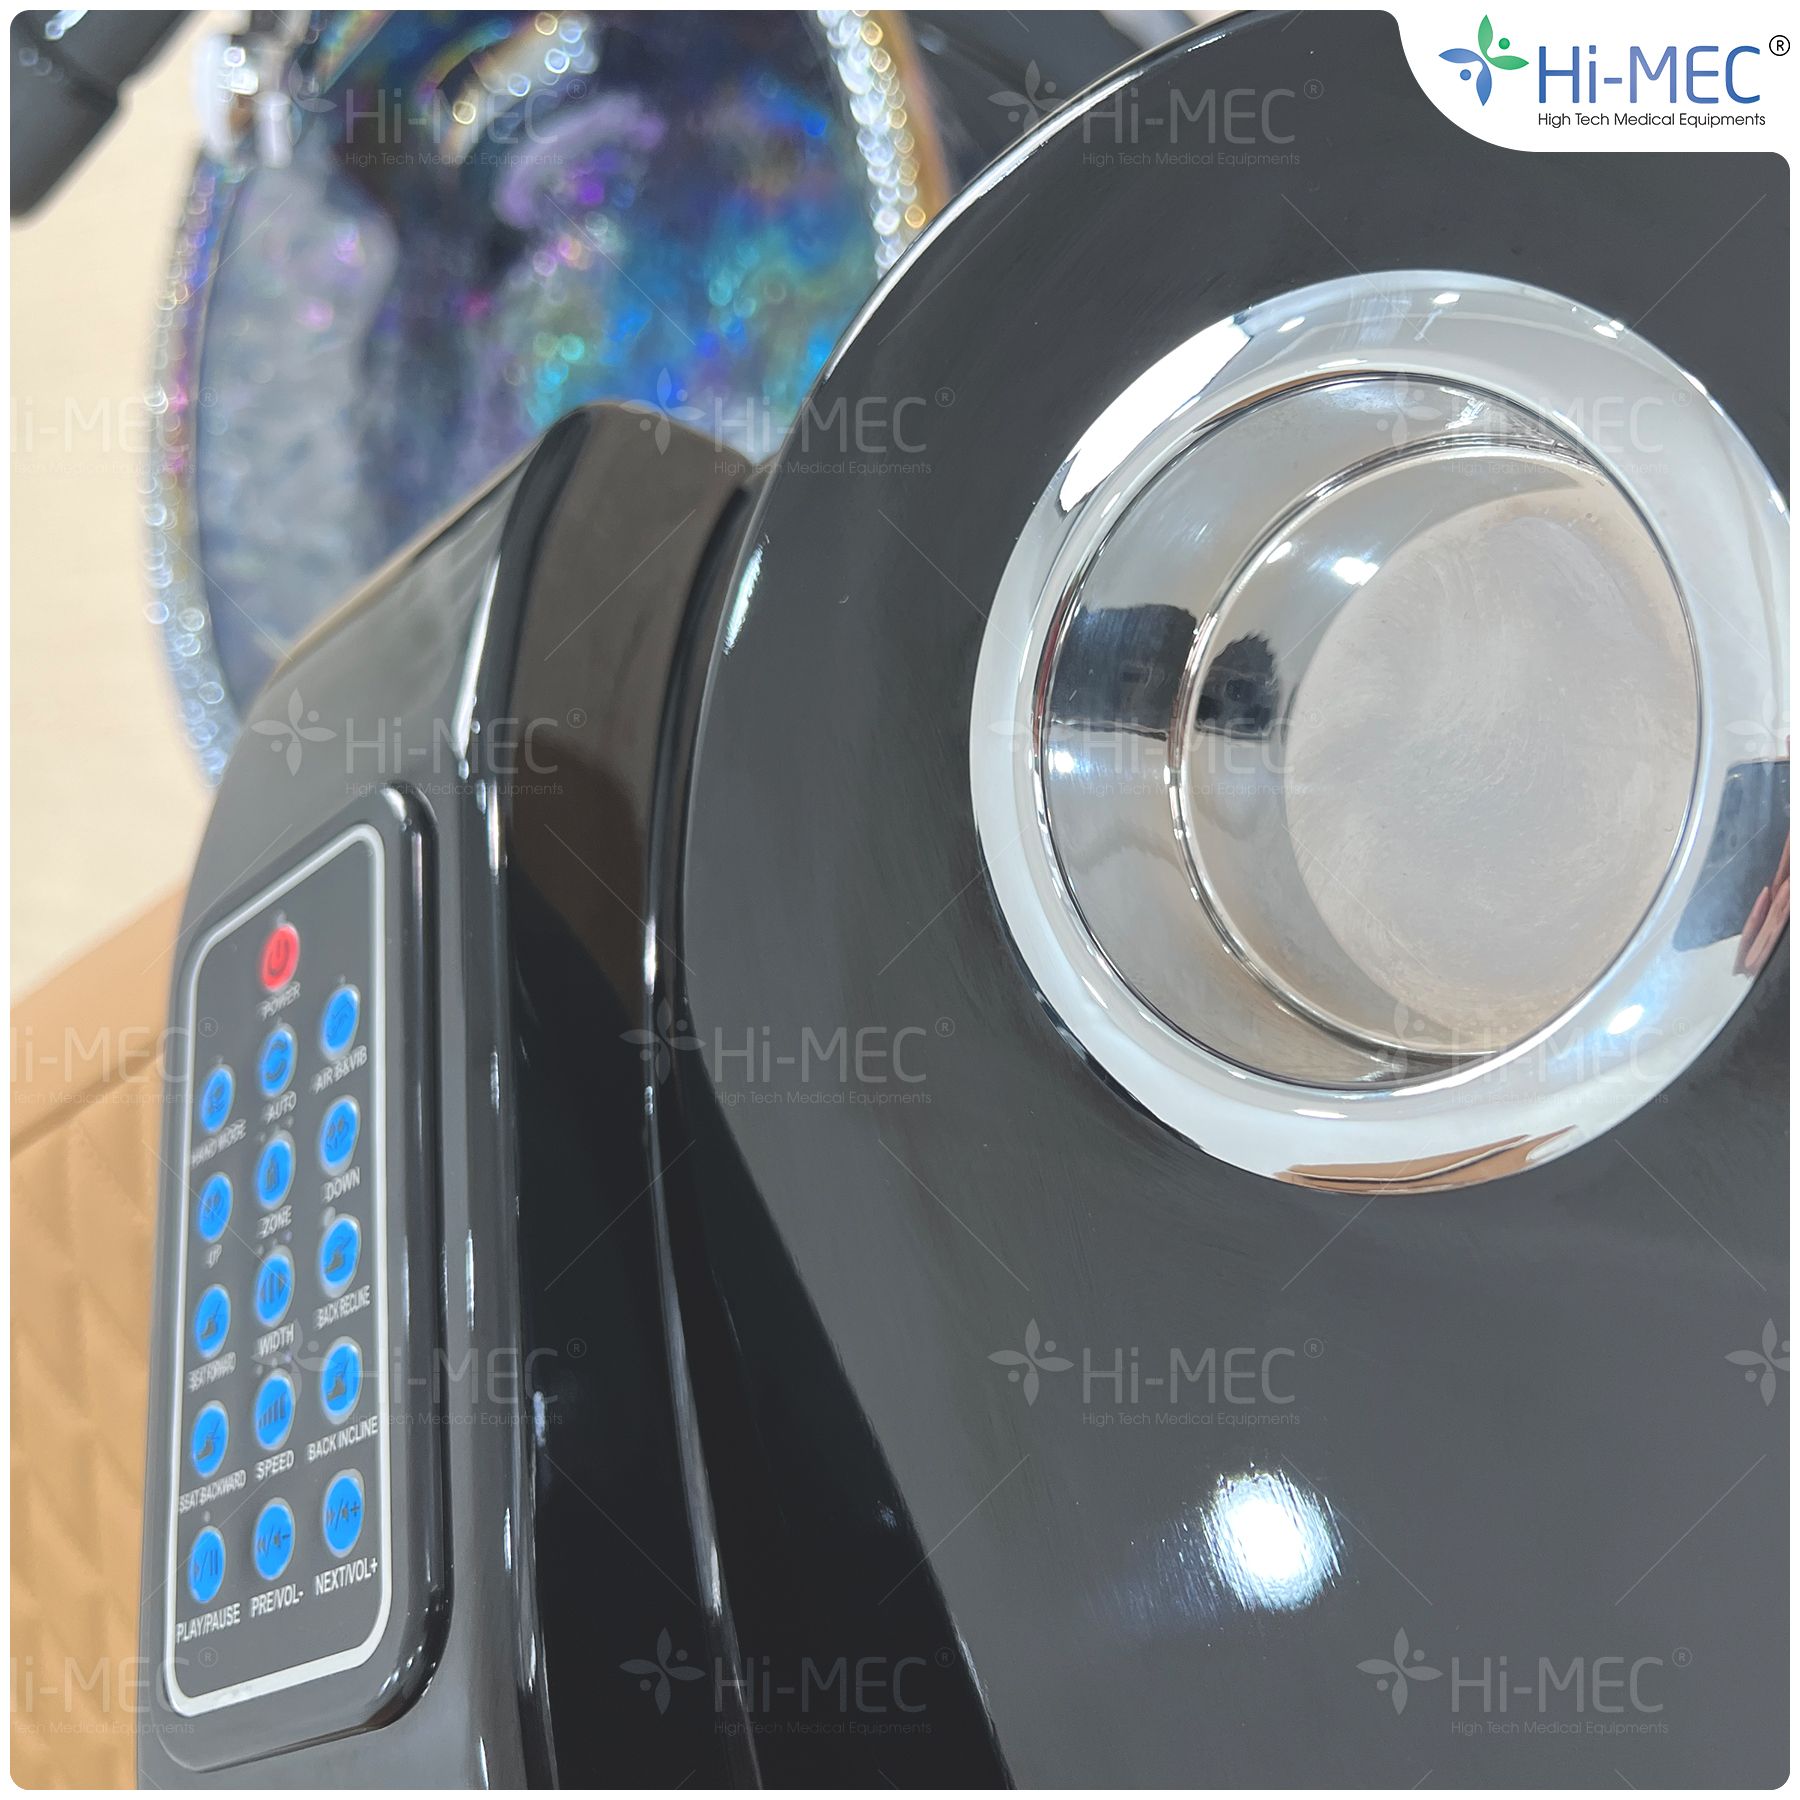  Ghế Nail Pedicure Mechanical Massage HMPC-103 